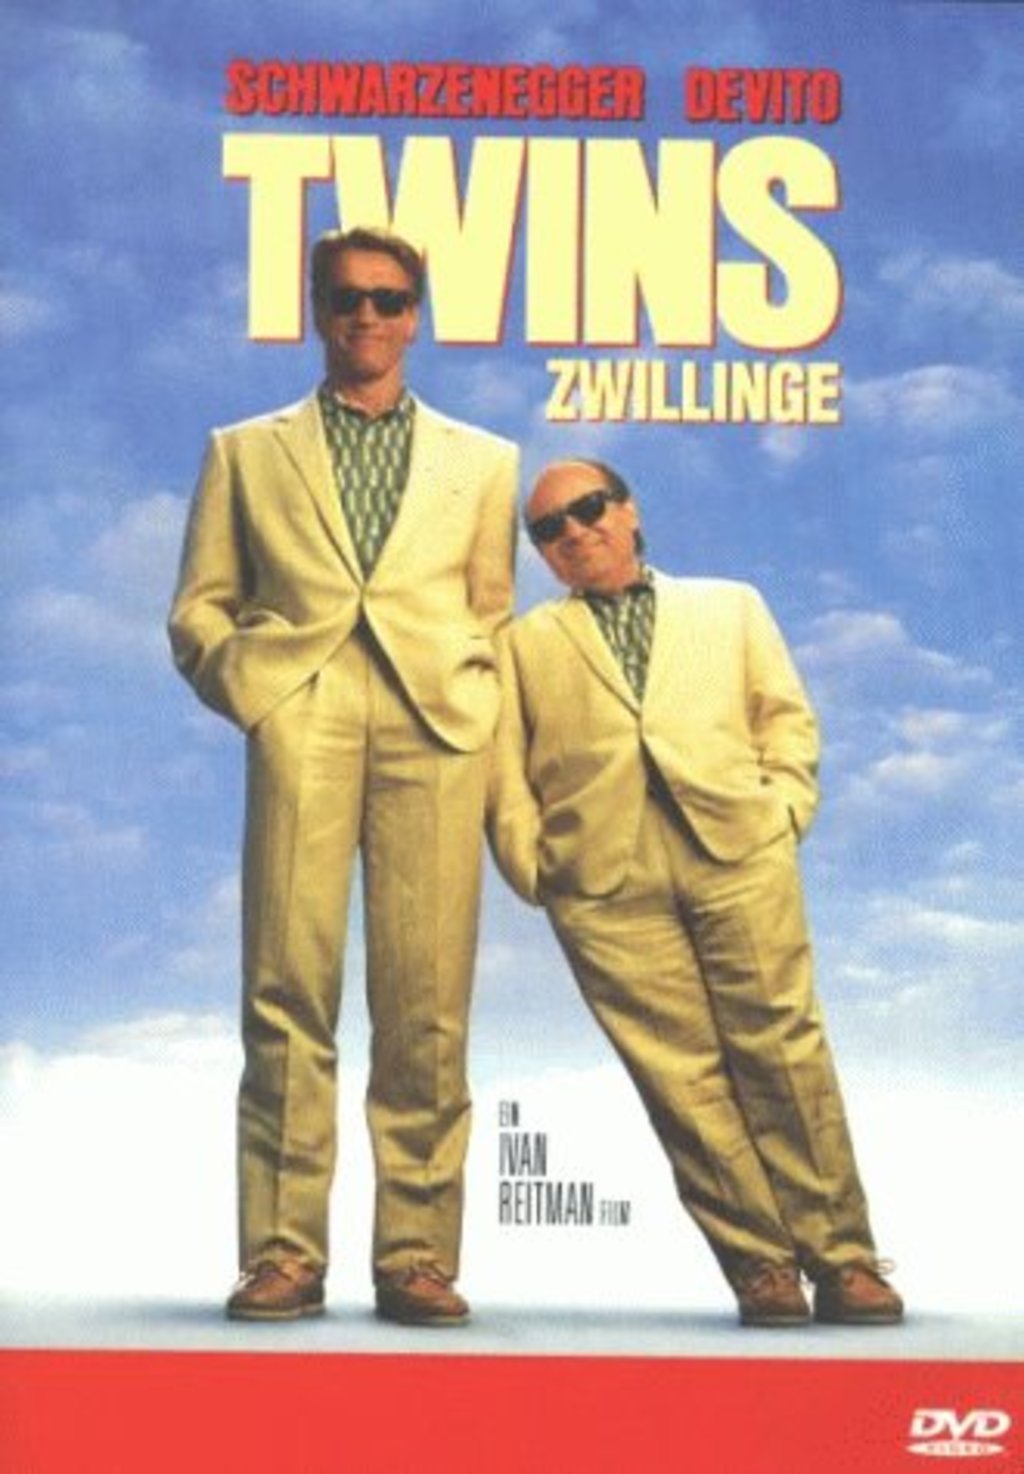 Watch Twins on Netflix Today! | NetflixMovies.com